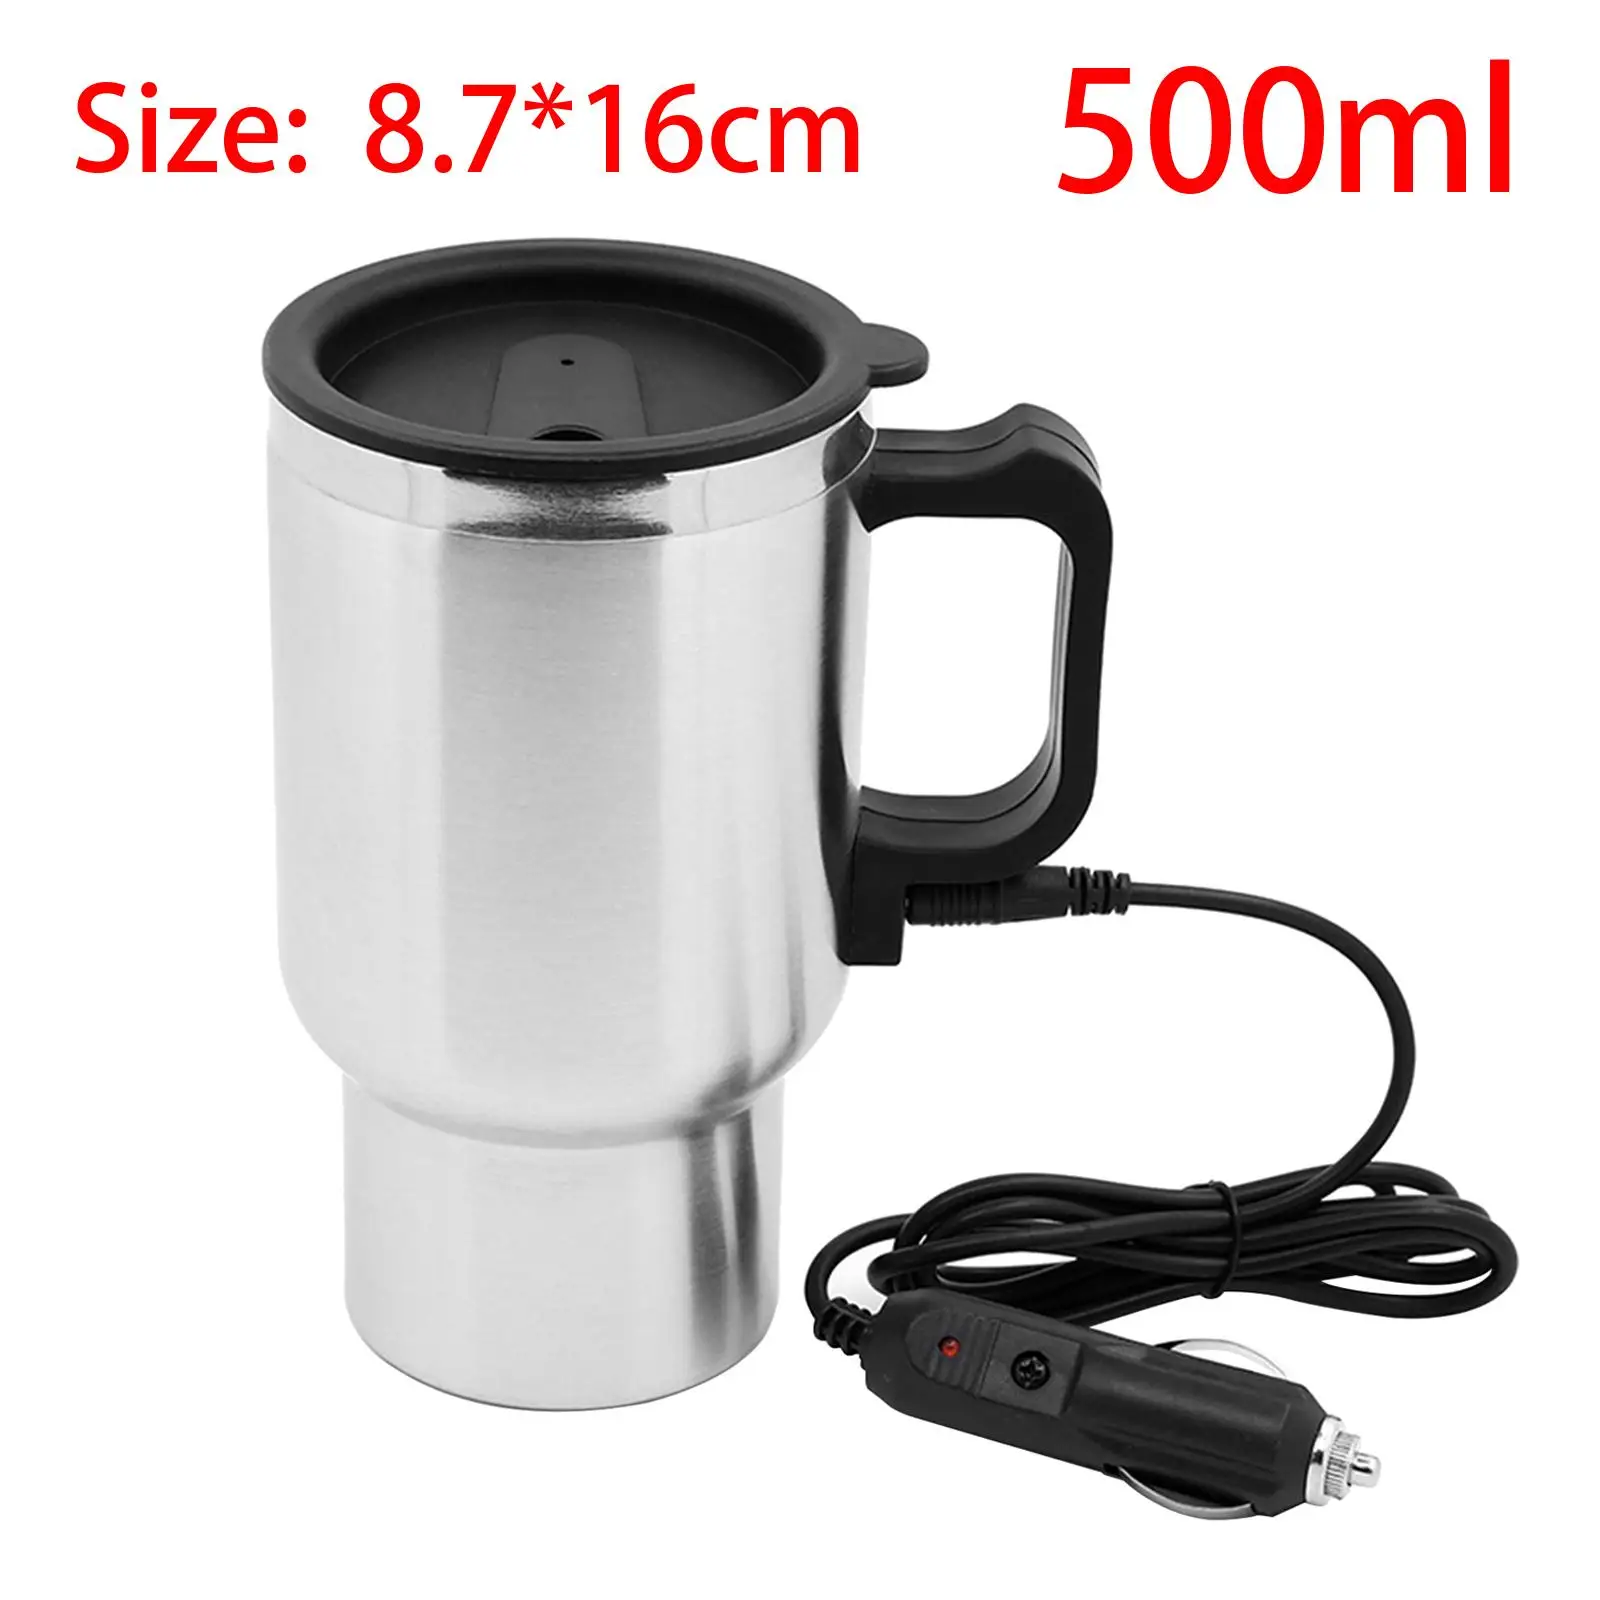 12V Car Heating Cup 500ml Heater Insulated Heated Mug Car Kettle for Tea Heating Water Milk Cars Trucks Coffee